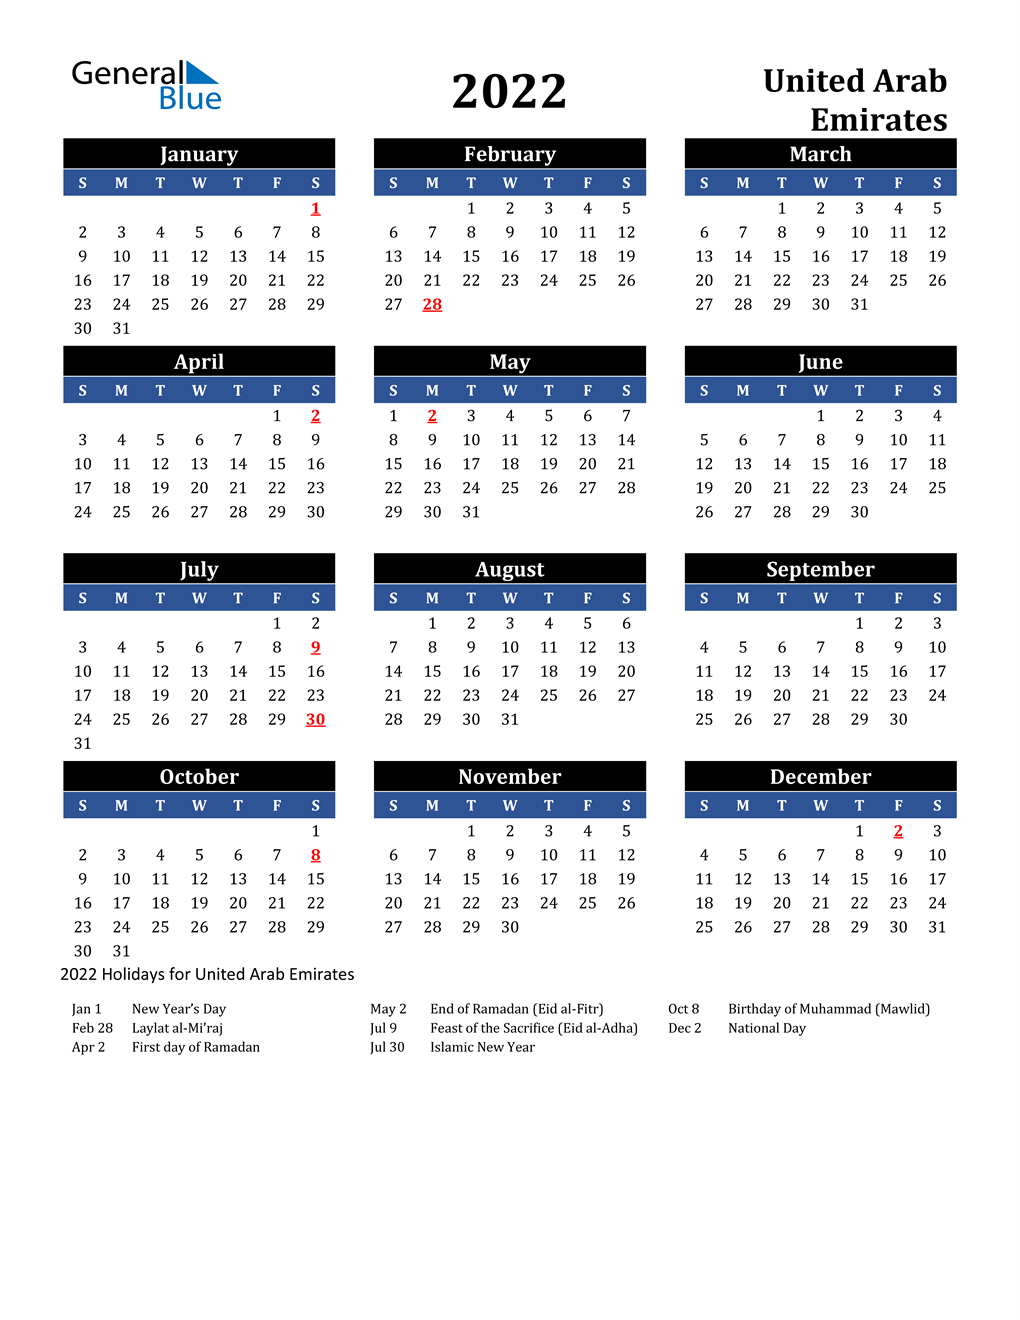 2022 United Arab Emirates Calendar with Holidays